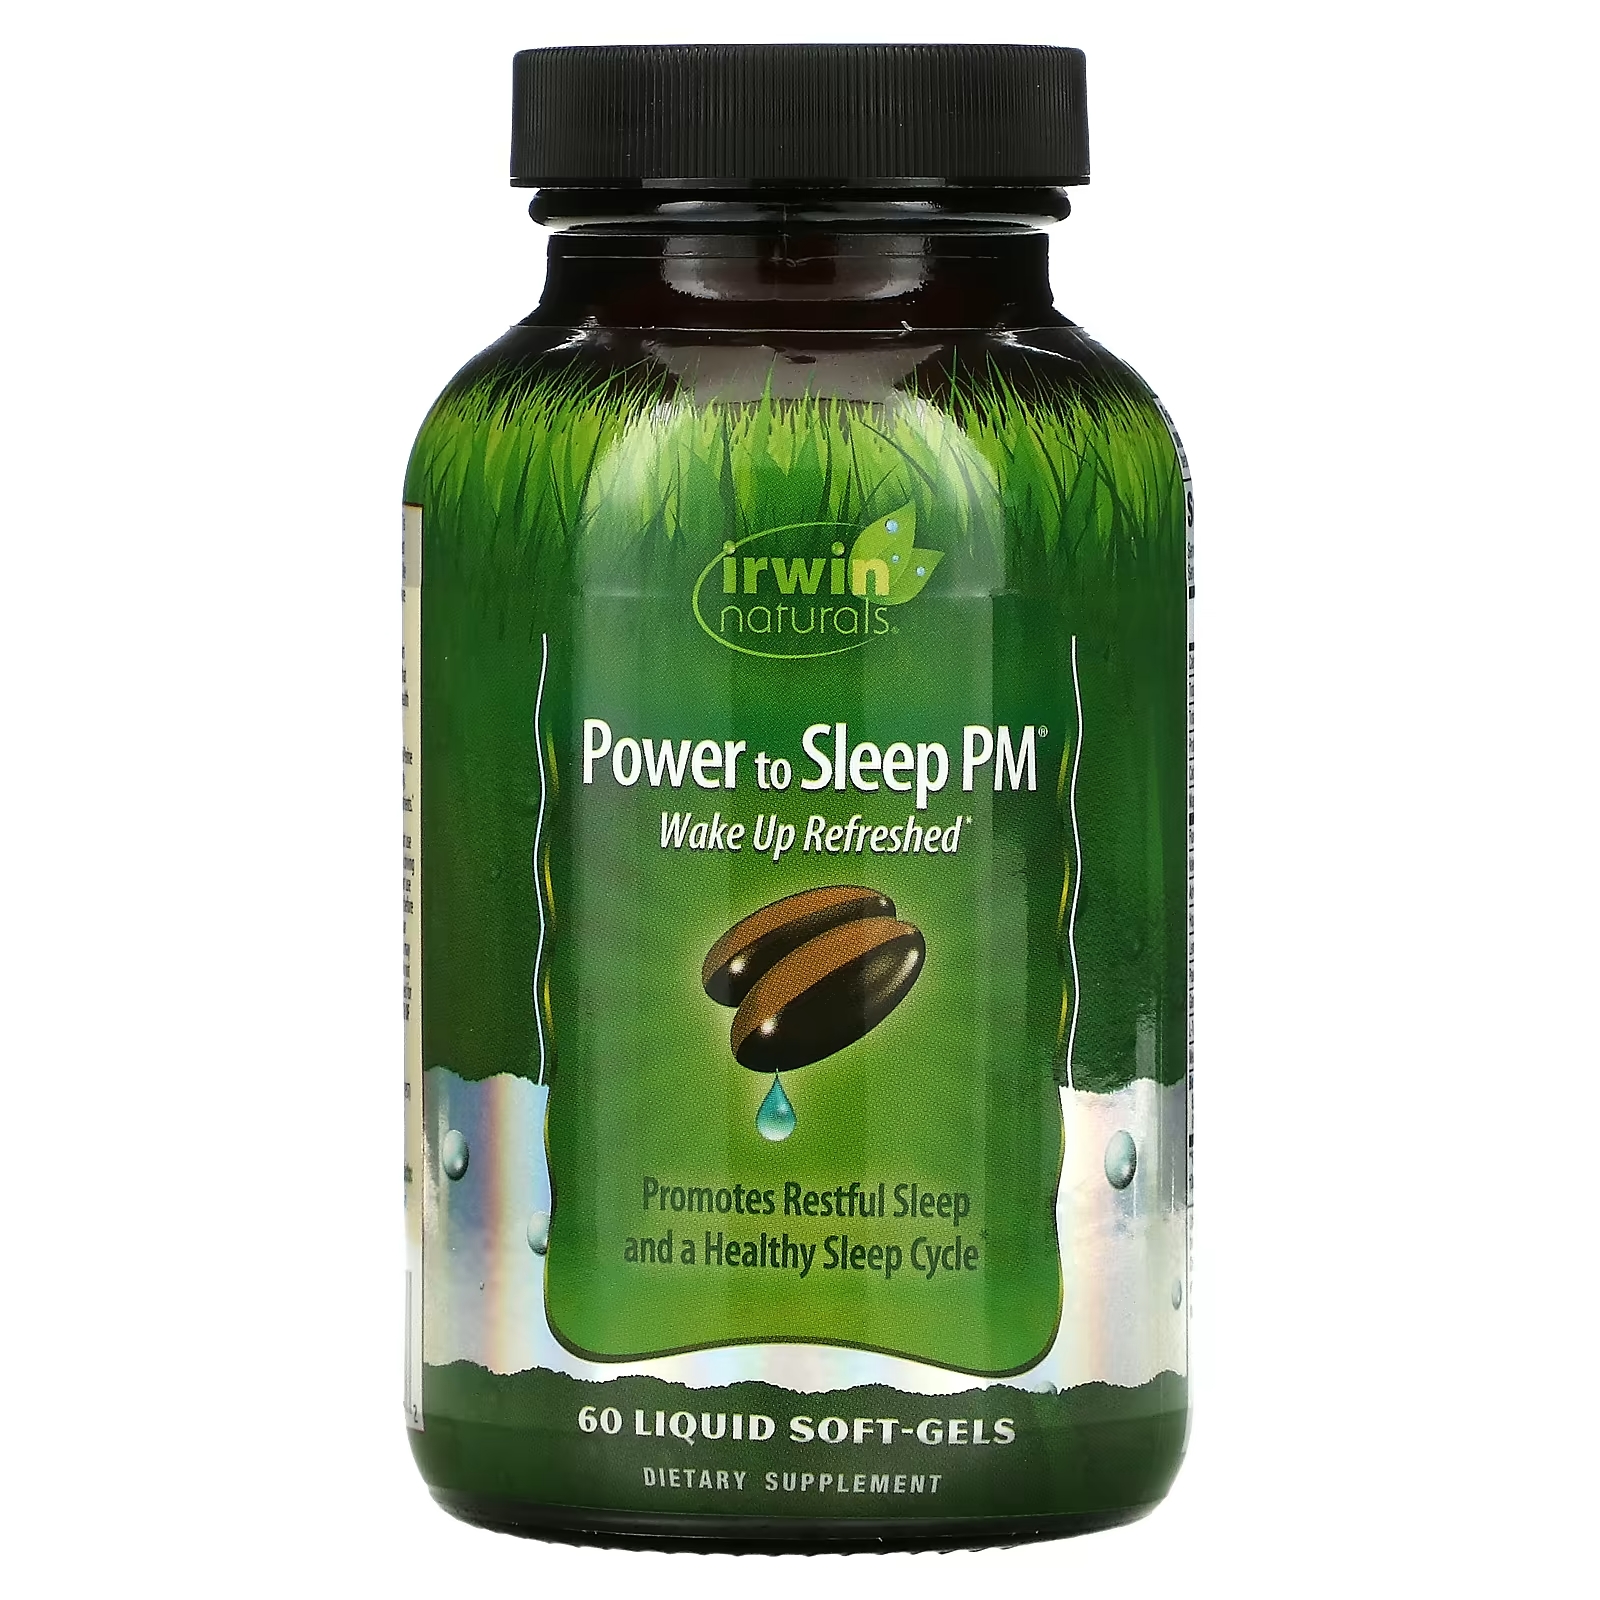 Пищевая Добавка Irwin Naturals Power to Sleep, 60 мягких капсул пищевая добавка irwin naturals liquid gel multi без железа 60 капсул